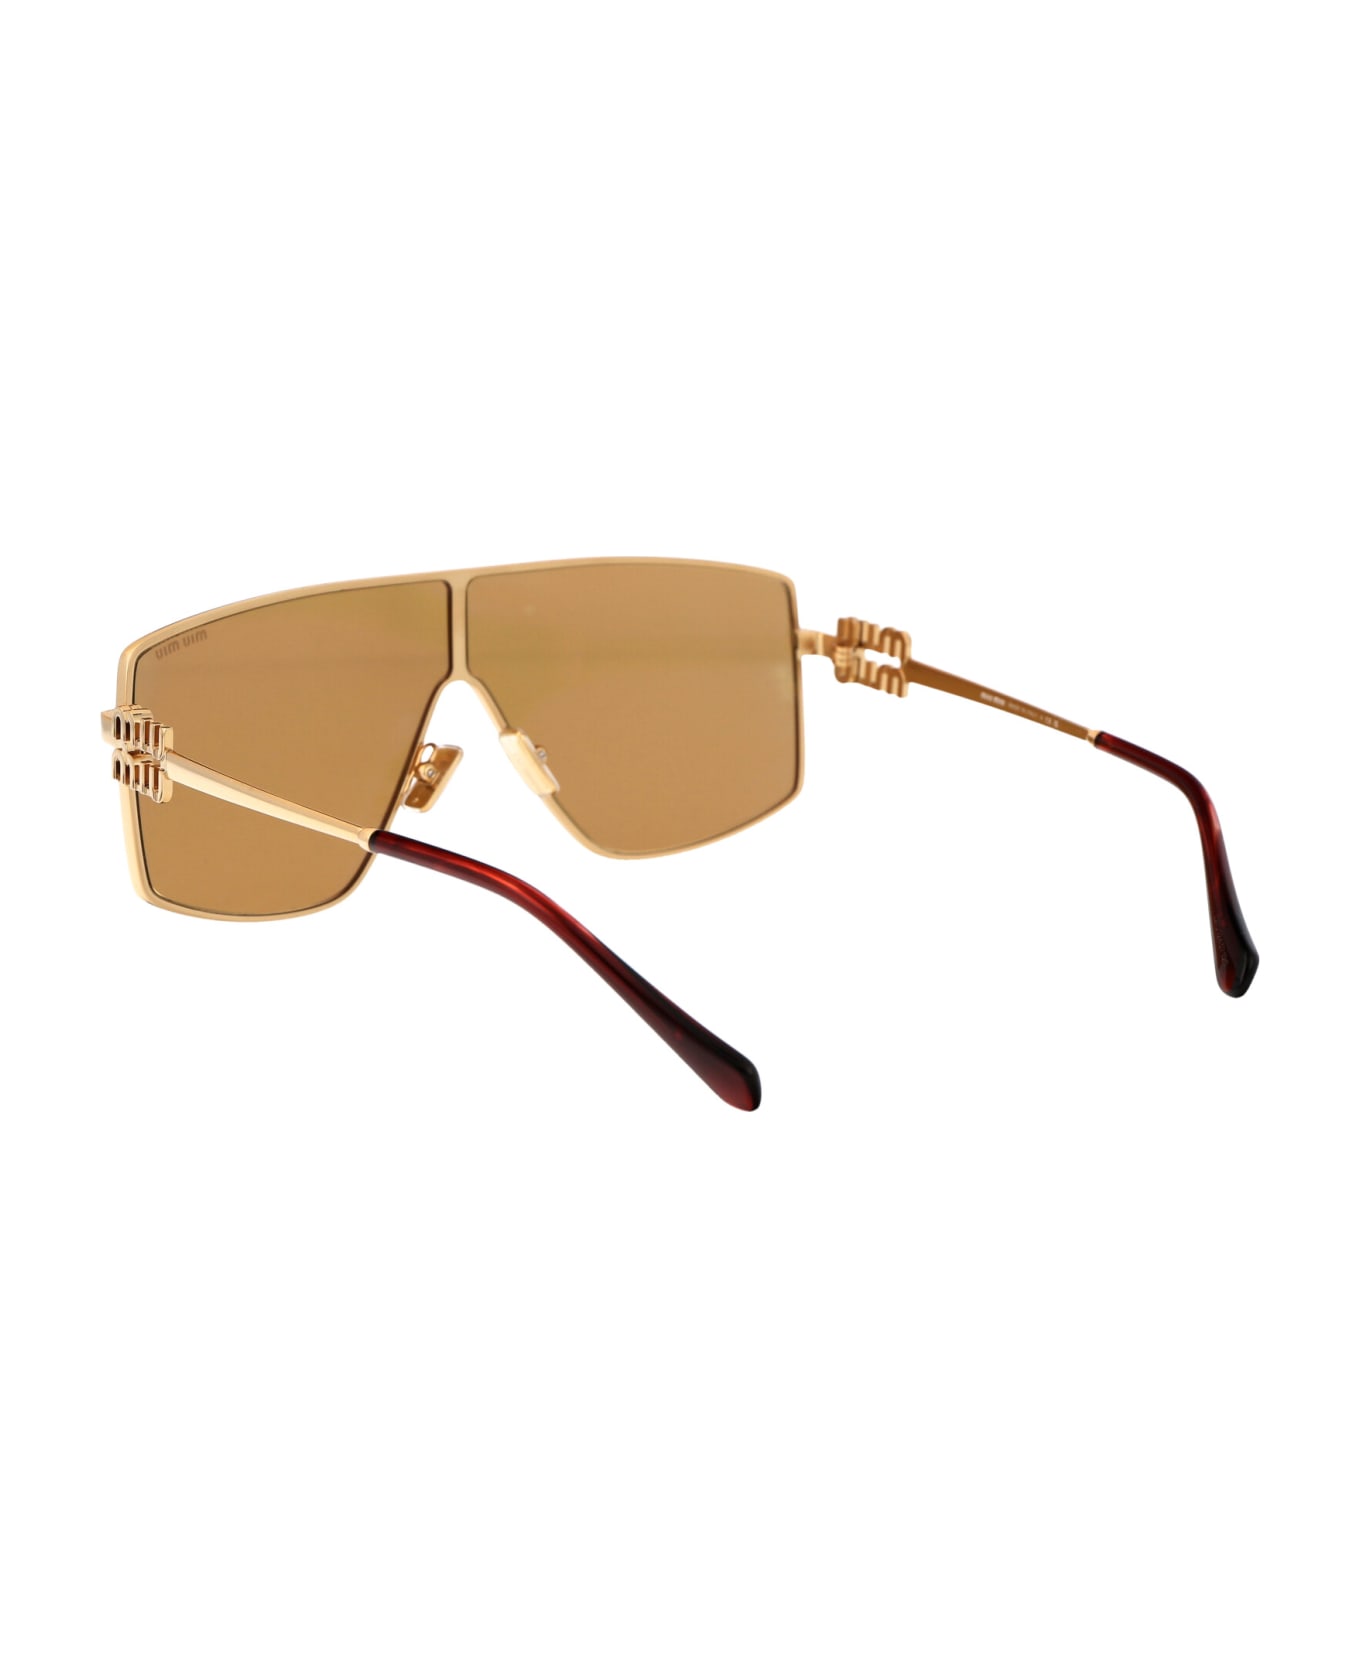 Miu Miu Eyewear 0mu 51zs Sunglasses - 5AK40D Gold